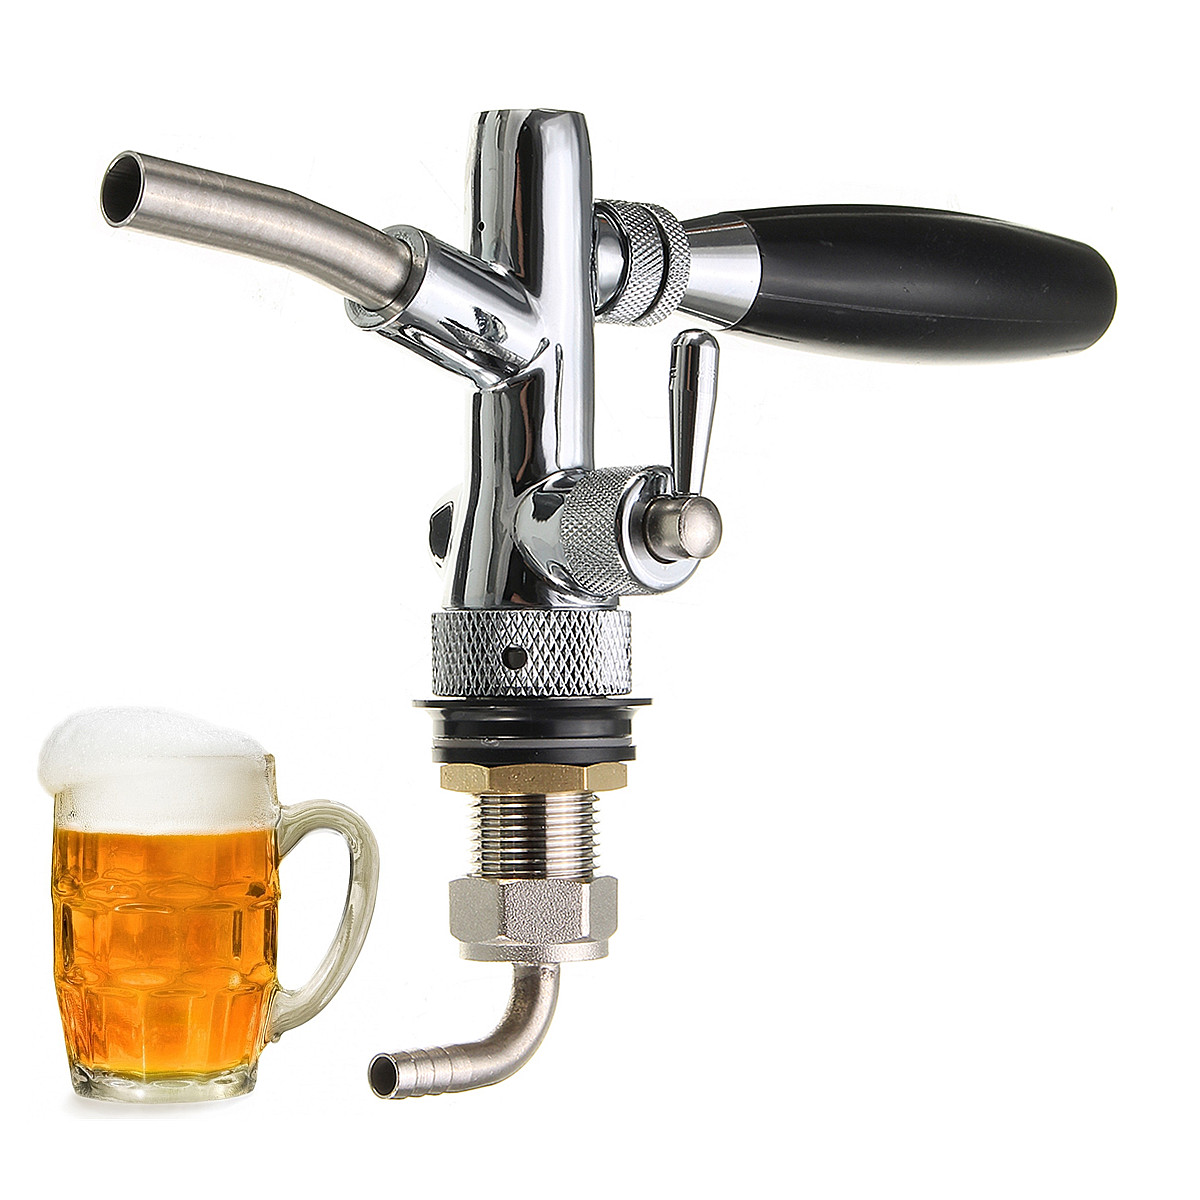 

Adjustable Draft Beer Faucet Home Brew Dispenser with Flow Controller For Keg Tap G5/8 Shank